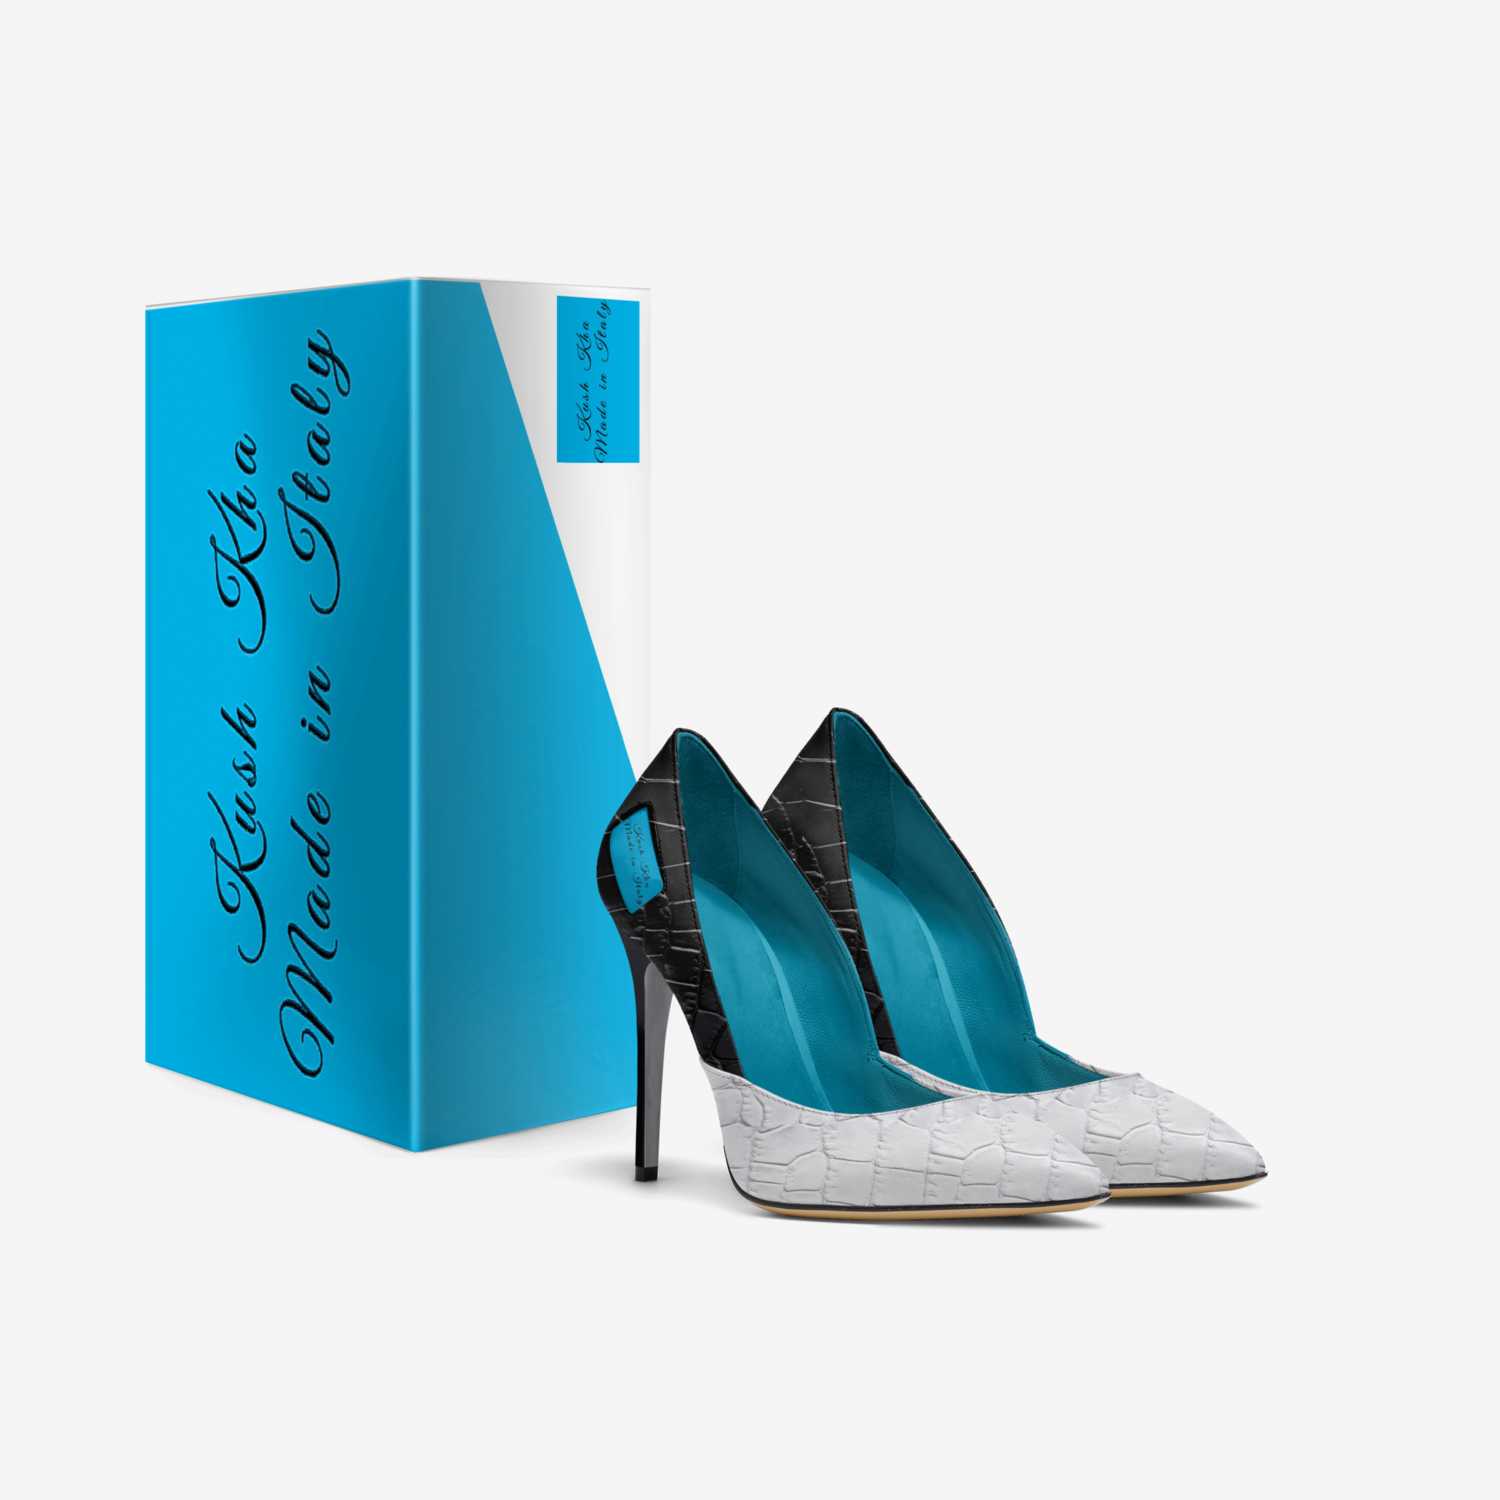 Kush Kha custom made in Italy shoes by Haero Dizaye | Box view